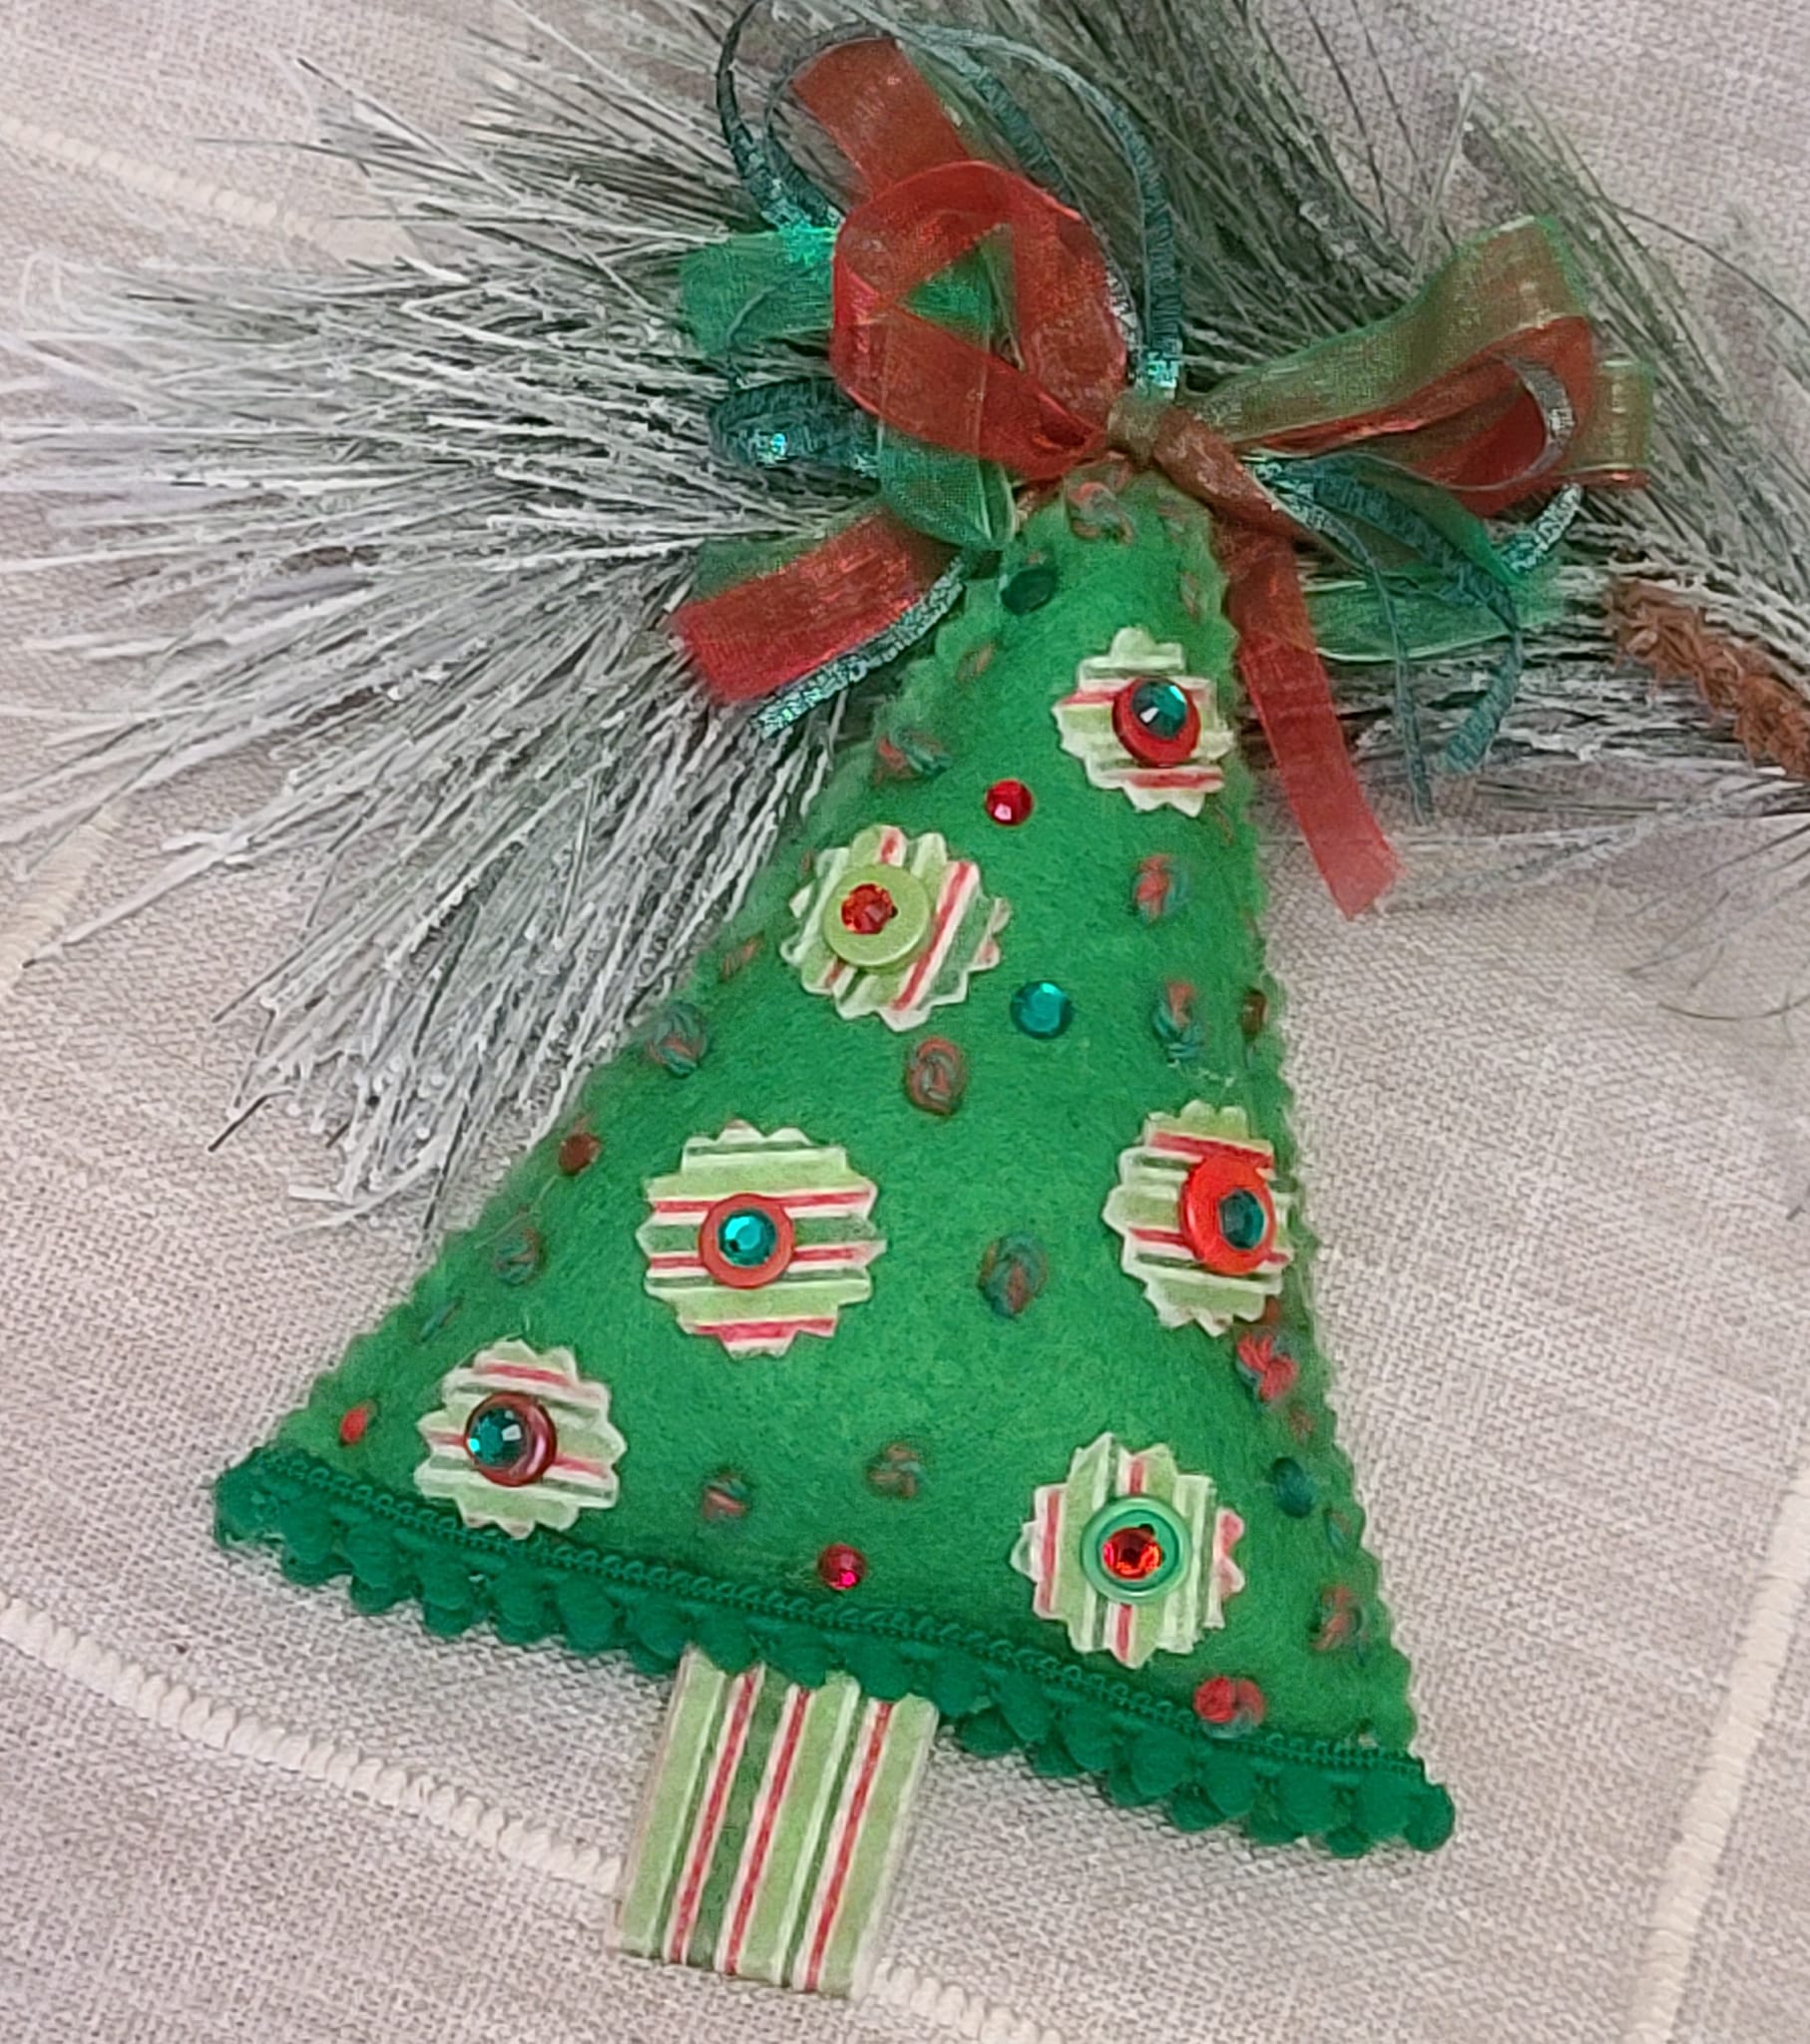 Christmas felt tree ornament - green with striped trim